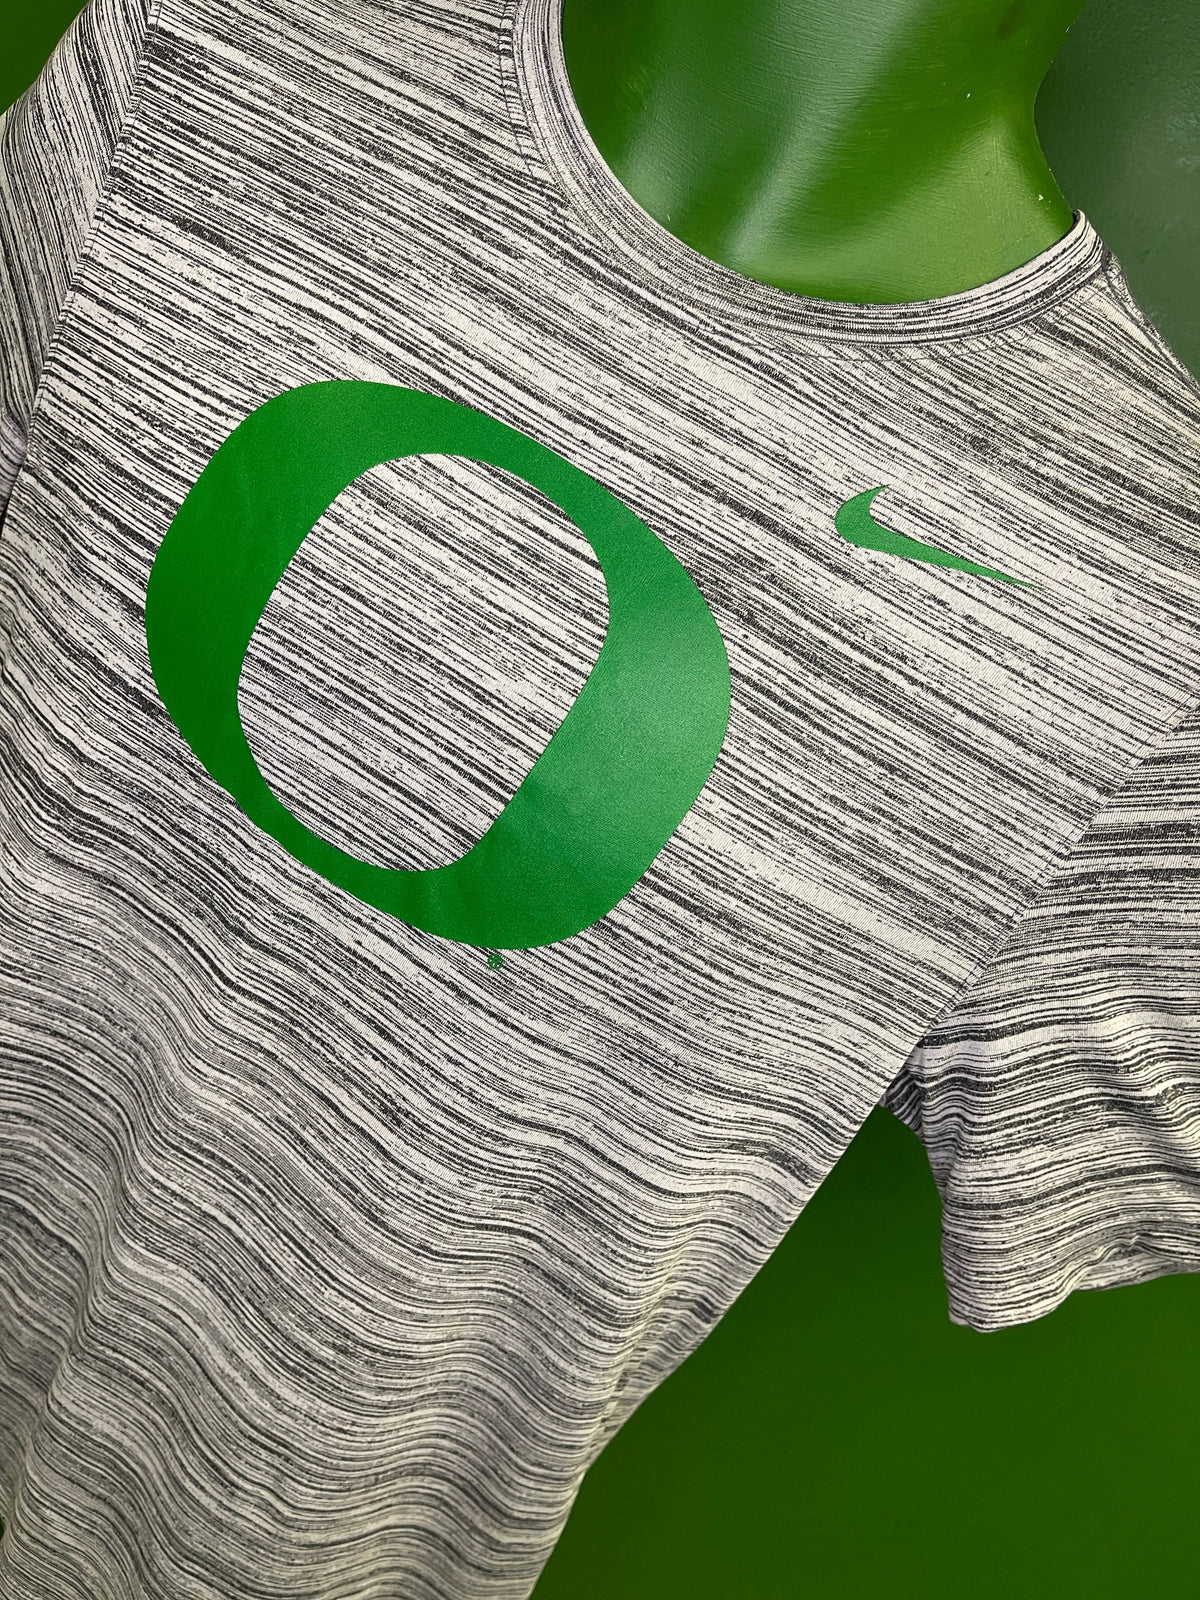 NCAA Oregon Ducks Grey Space Dye T-Shirt Youth X-Large 18-20